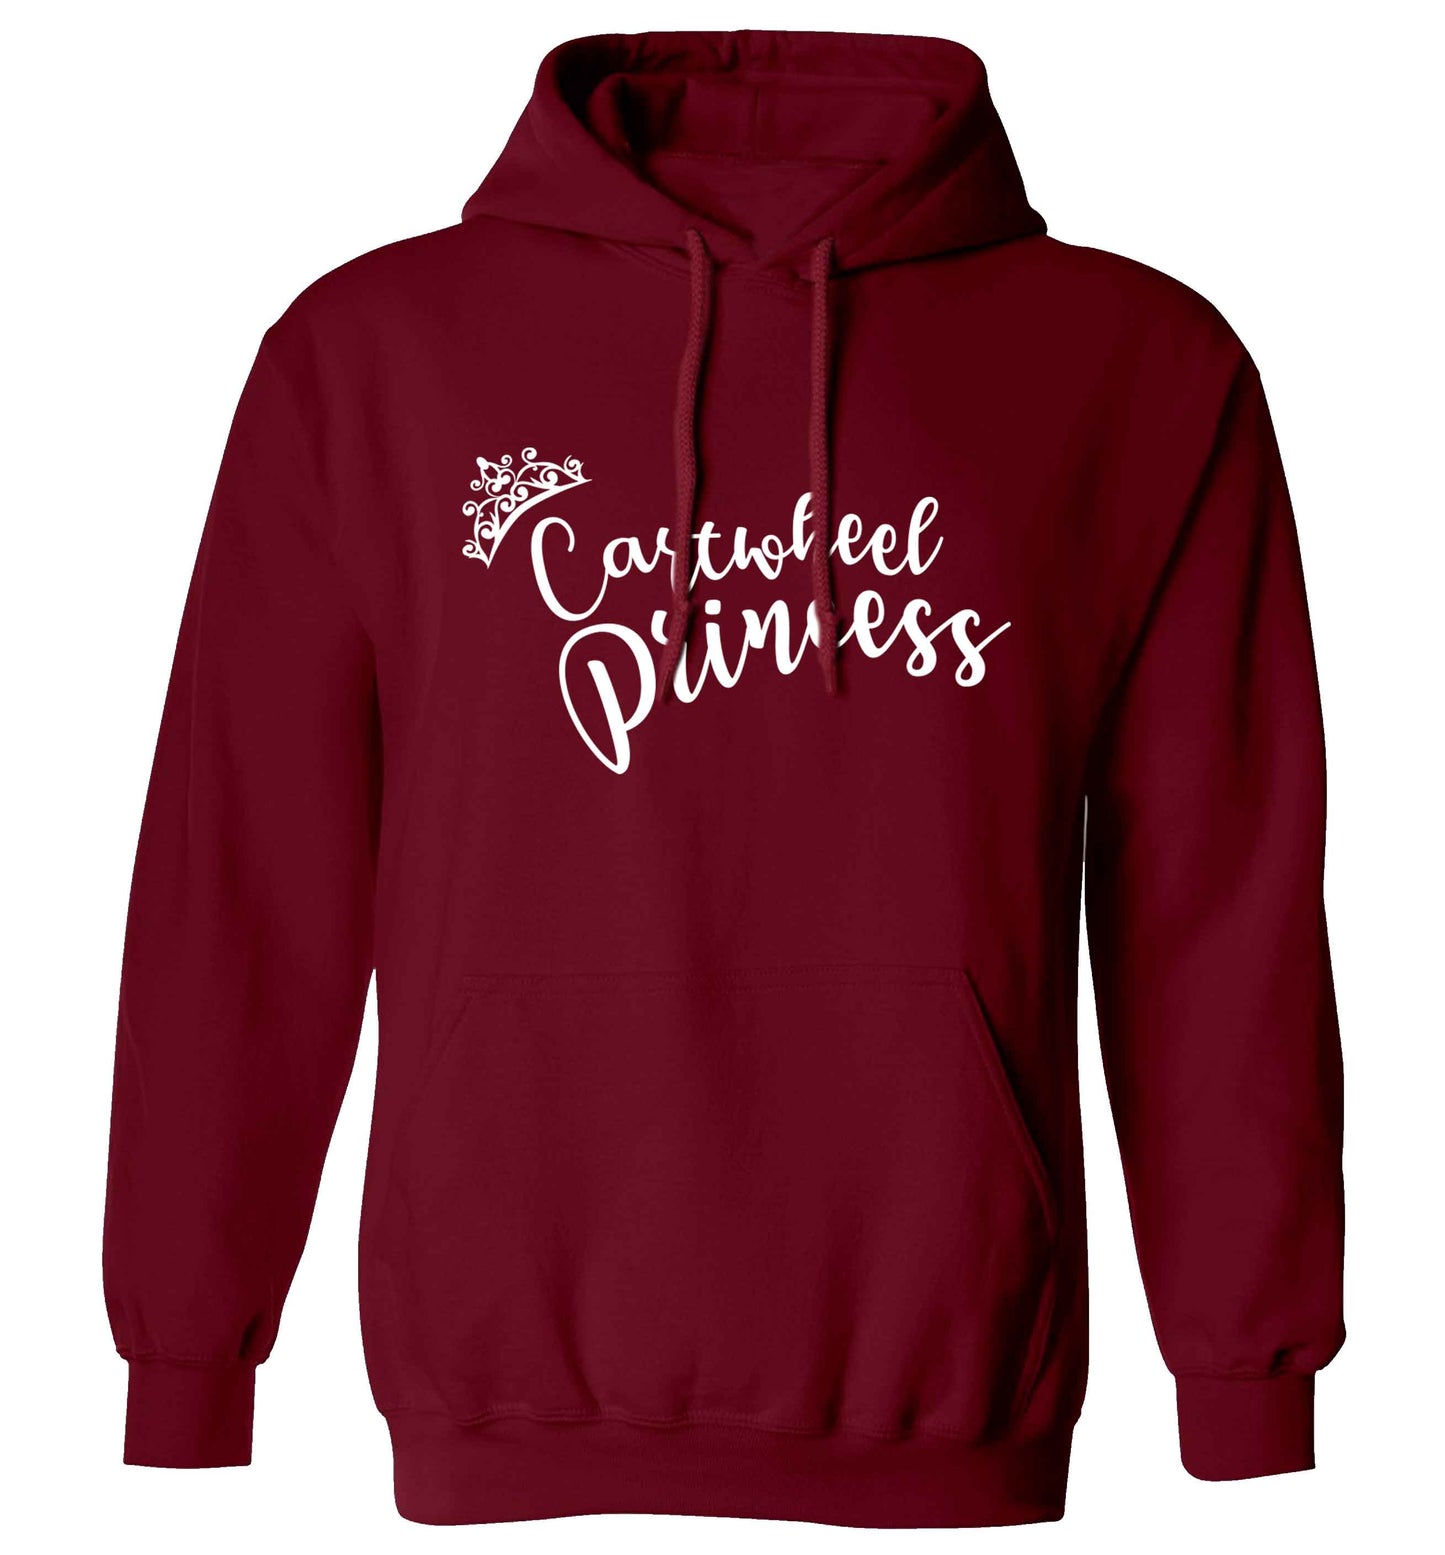 Cartwheel princess adults unisex maroon hoodie 2XL